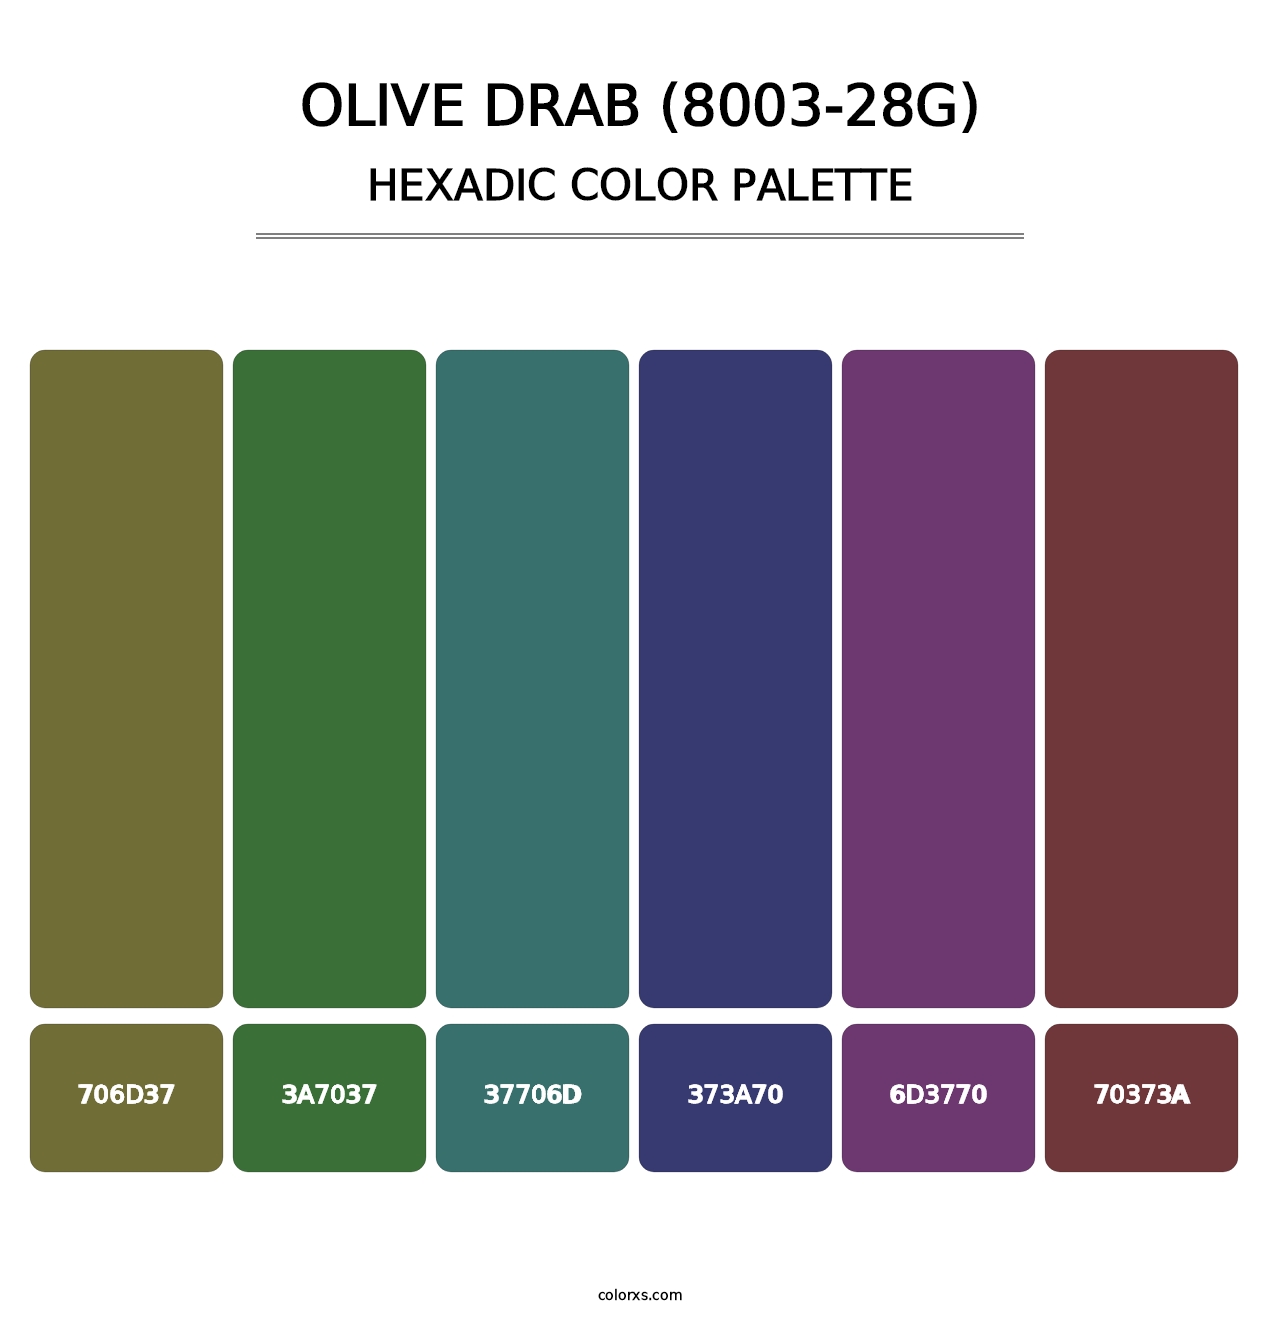 Olive Drab (8003-28G) - Hexadic Color Palette